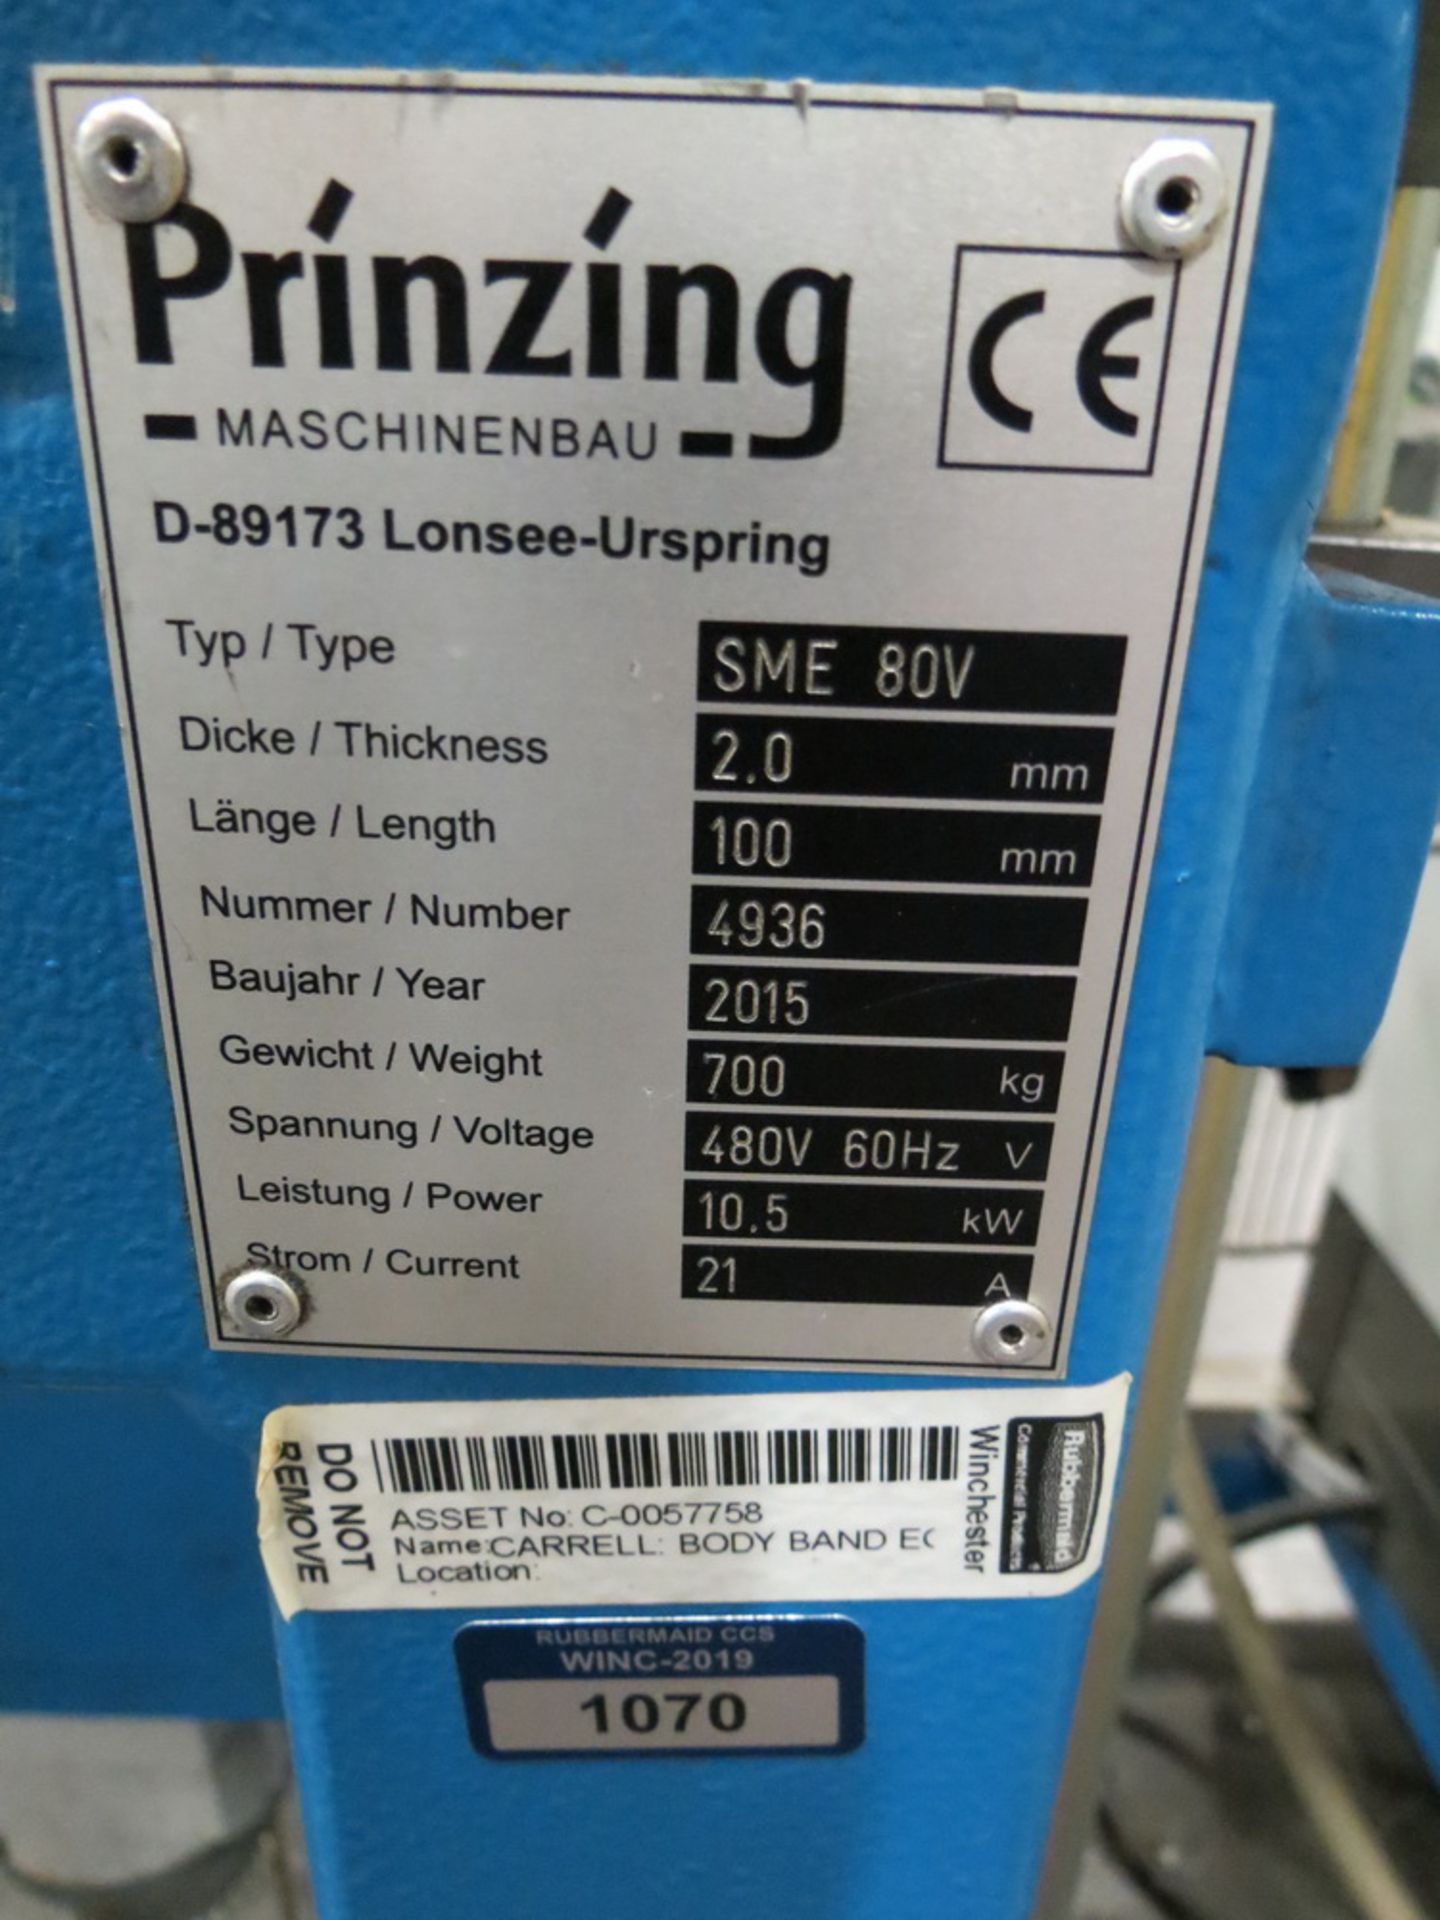 2015 Prinzing Model SME 80V Body Band Flanger, 2.0 mm Thickness, 100 mm Length - Image 5 of 13